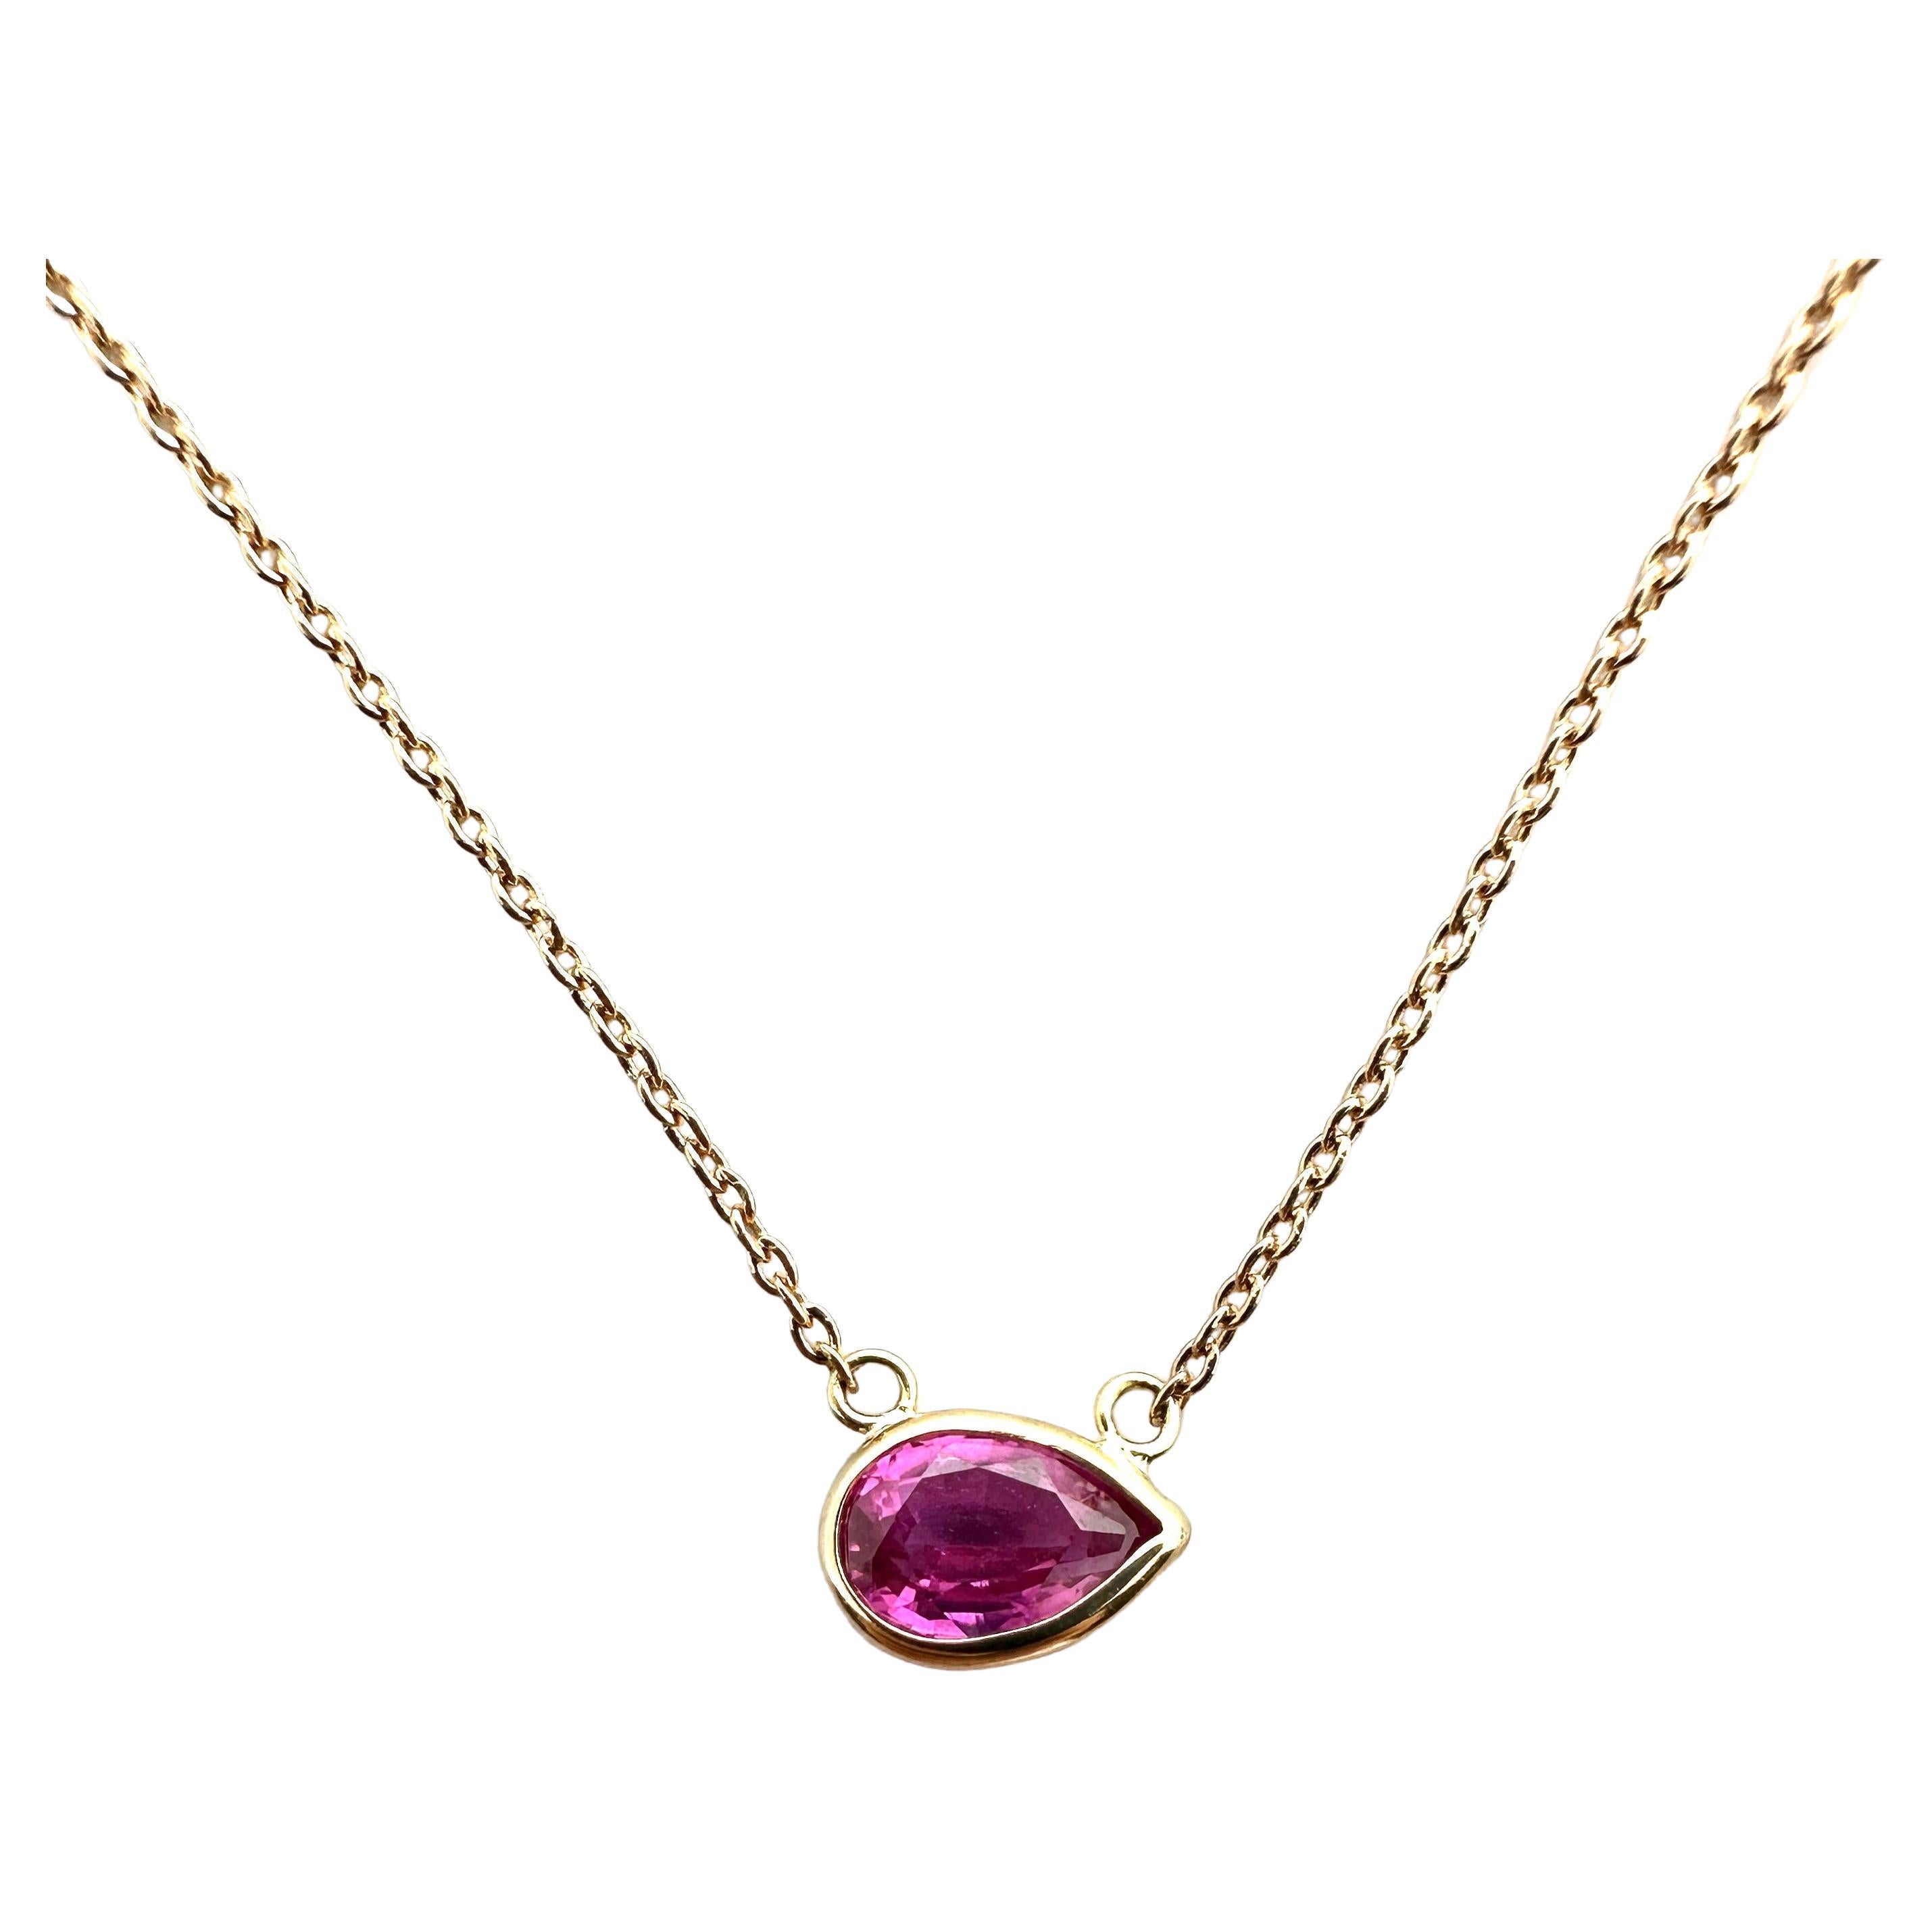 1.17 Carat Pink Sapphire Pear & Fashion Necklaces Berberyn Certified In 14K RG